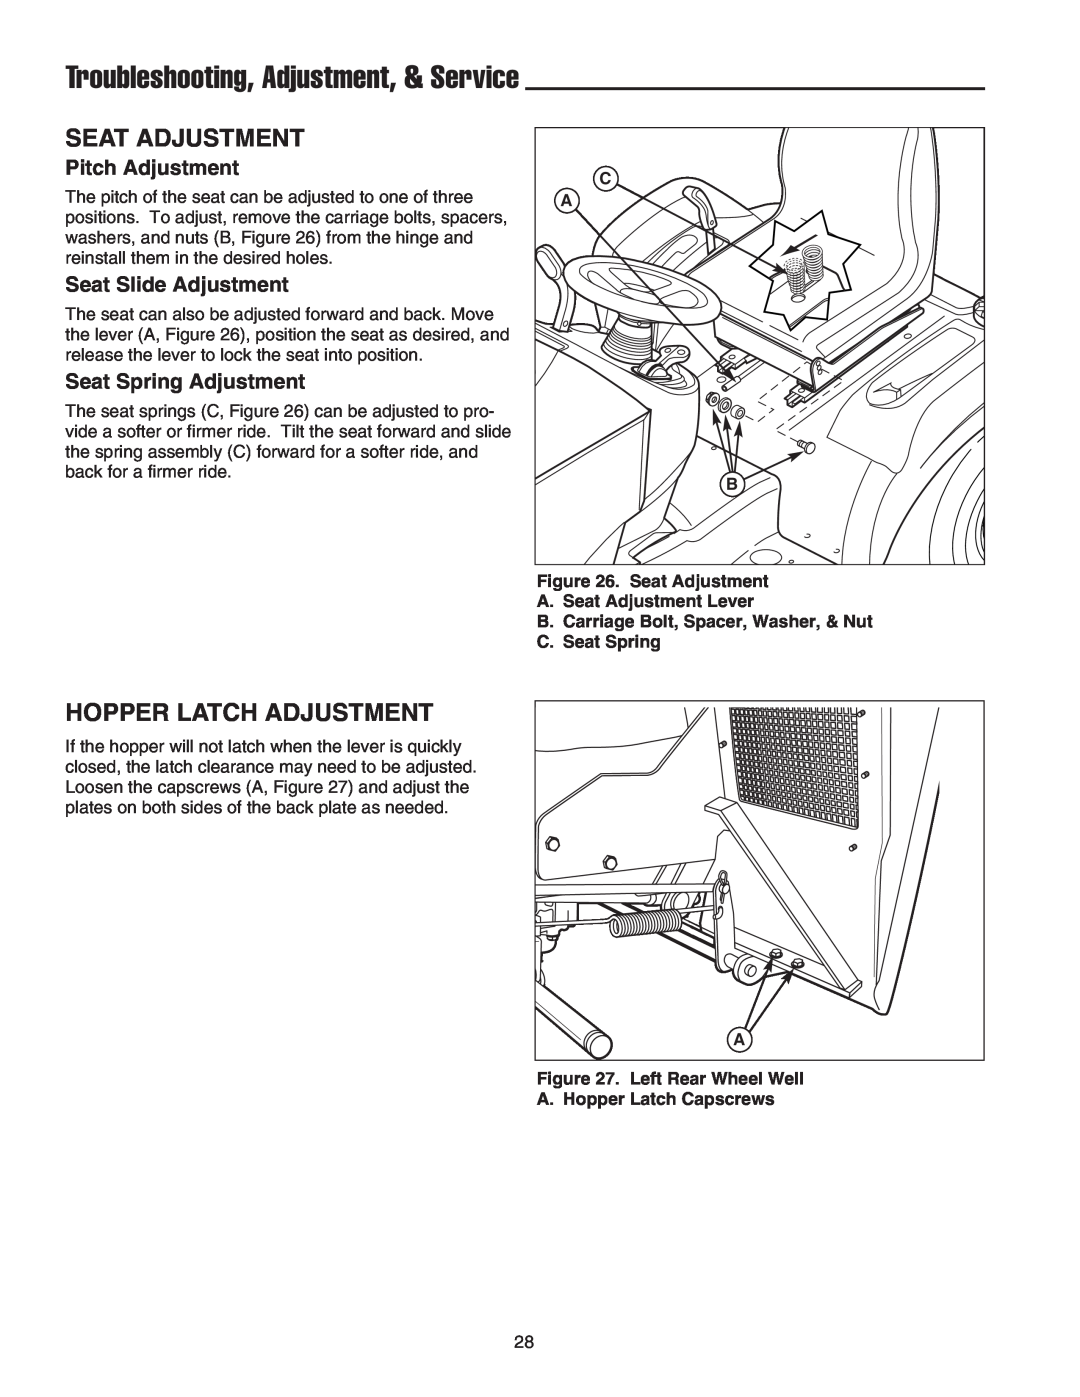 Snapper 2400 XL manual Seat Adjustment, Hopper Latch Adjustment, Troubleshooting, Adjustment, & Service 